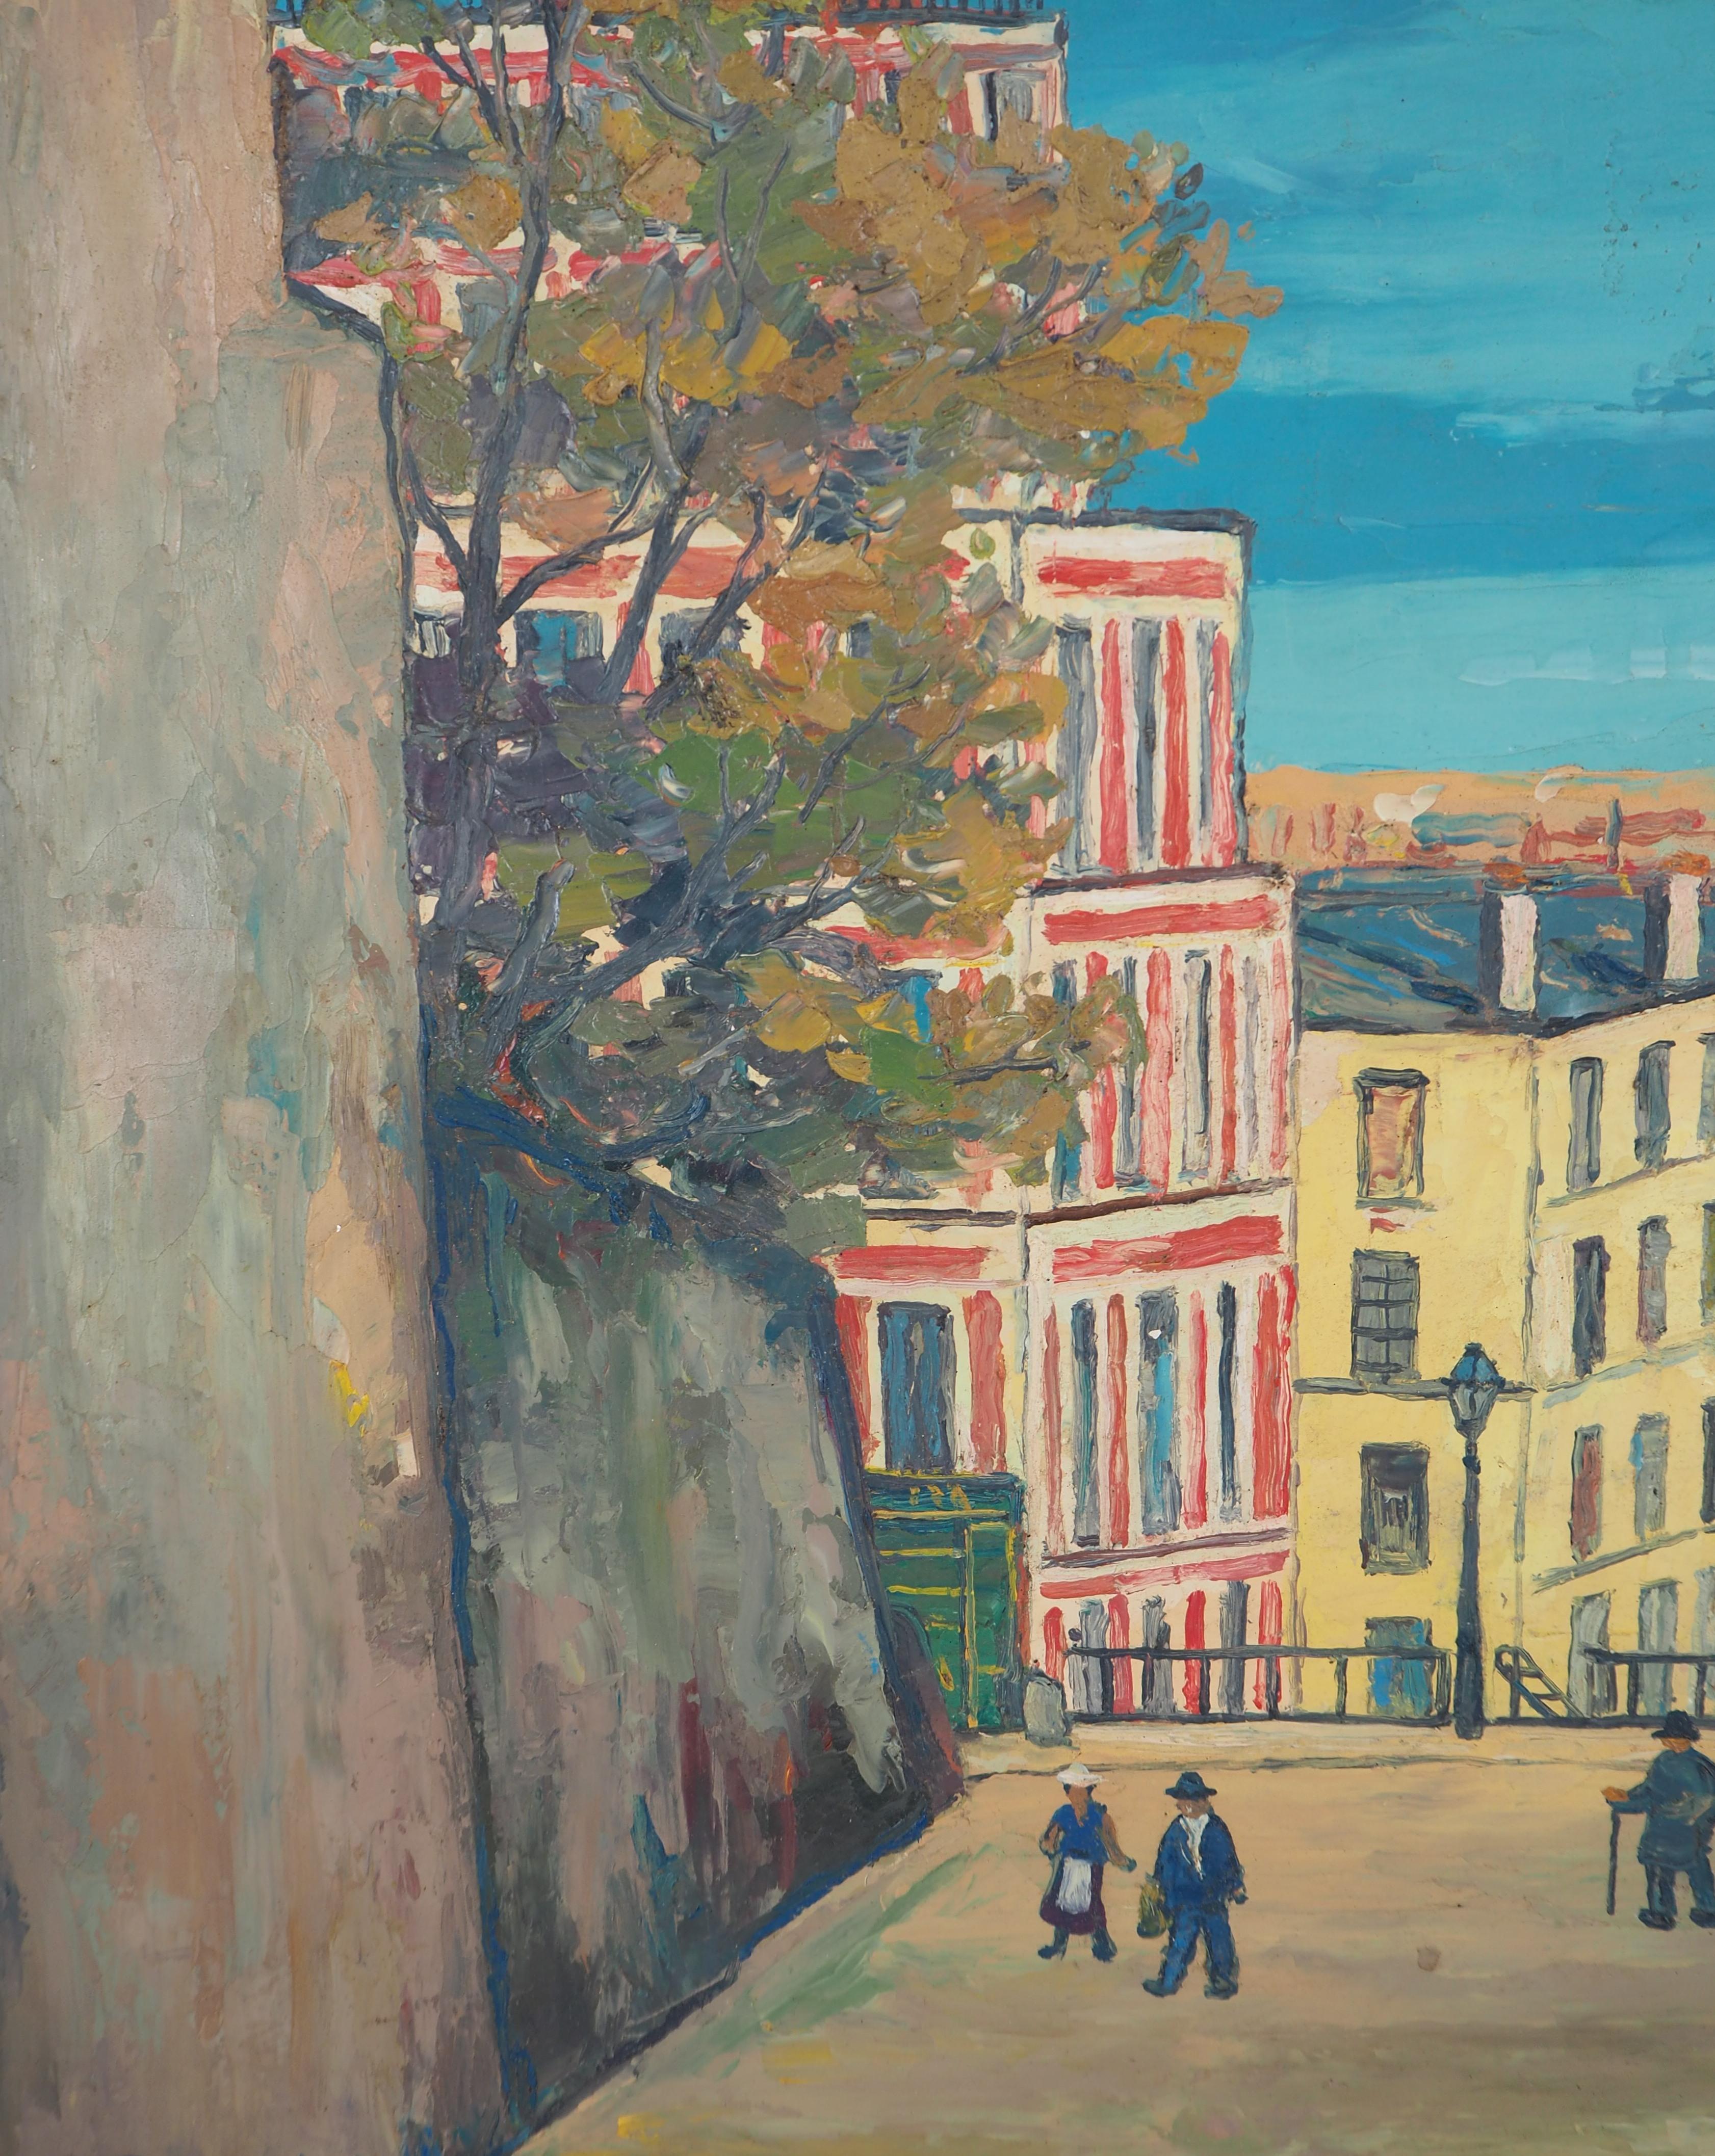 Elisée MACLET (1881-1962)
Paris, Street in Montmartre

Original oil on board
Signed bottom left
On board 48 x 64 cm (c. 19 x 25